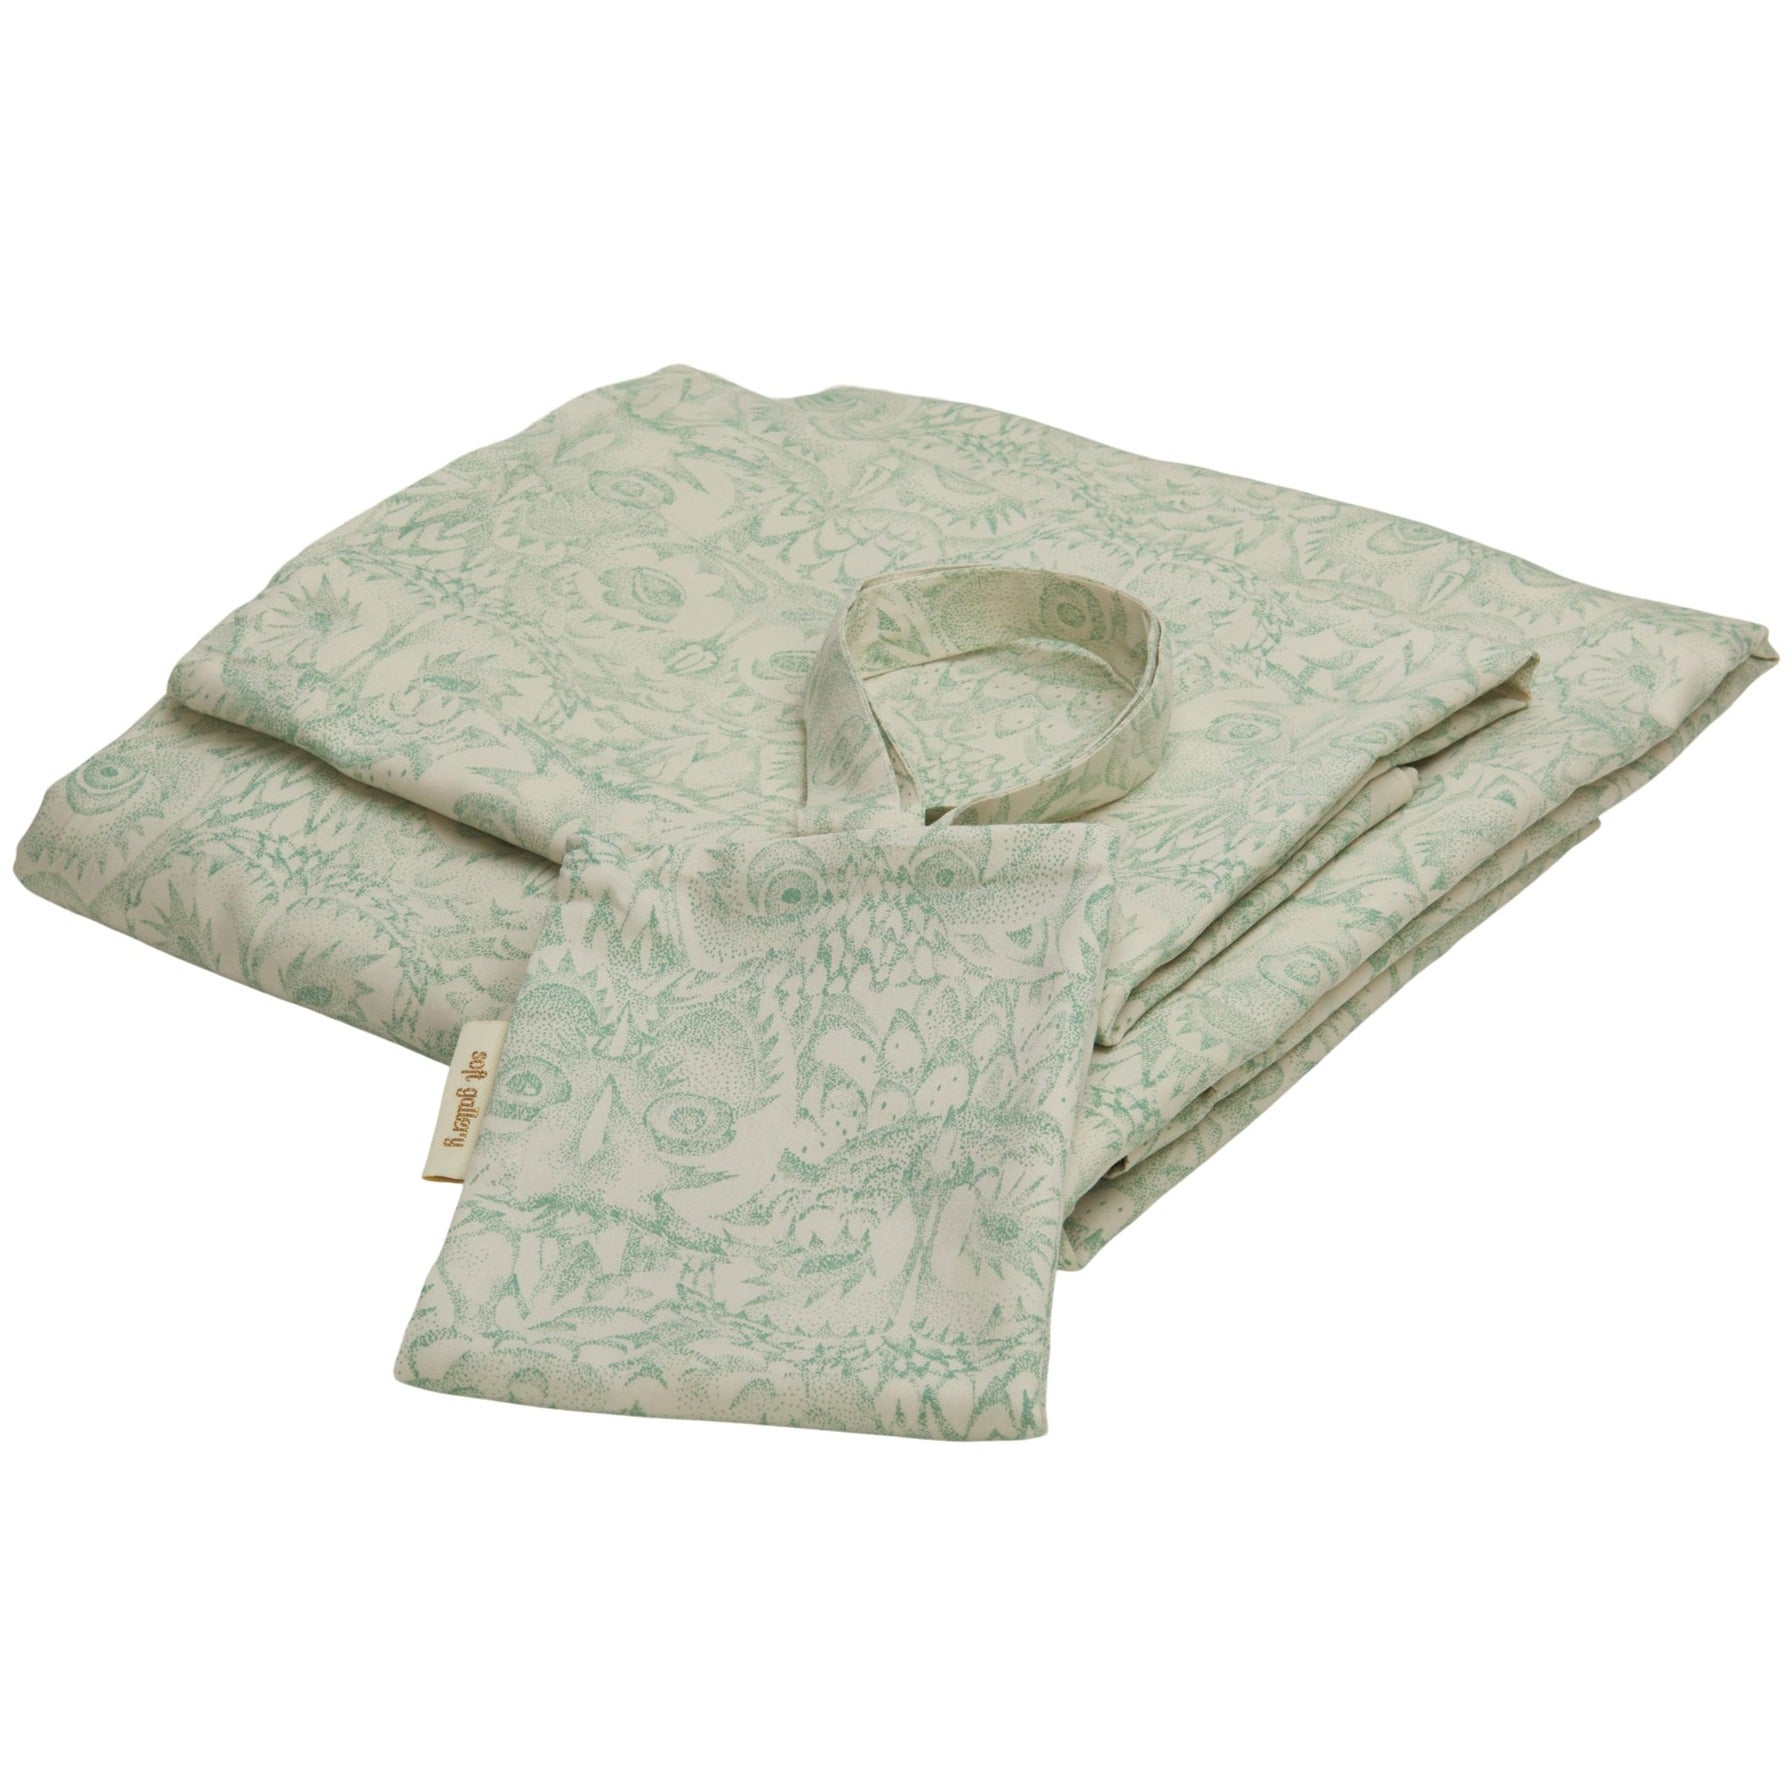 Soft Gallery - Bed Linen Junior Pastel Owl - Harbor Gray